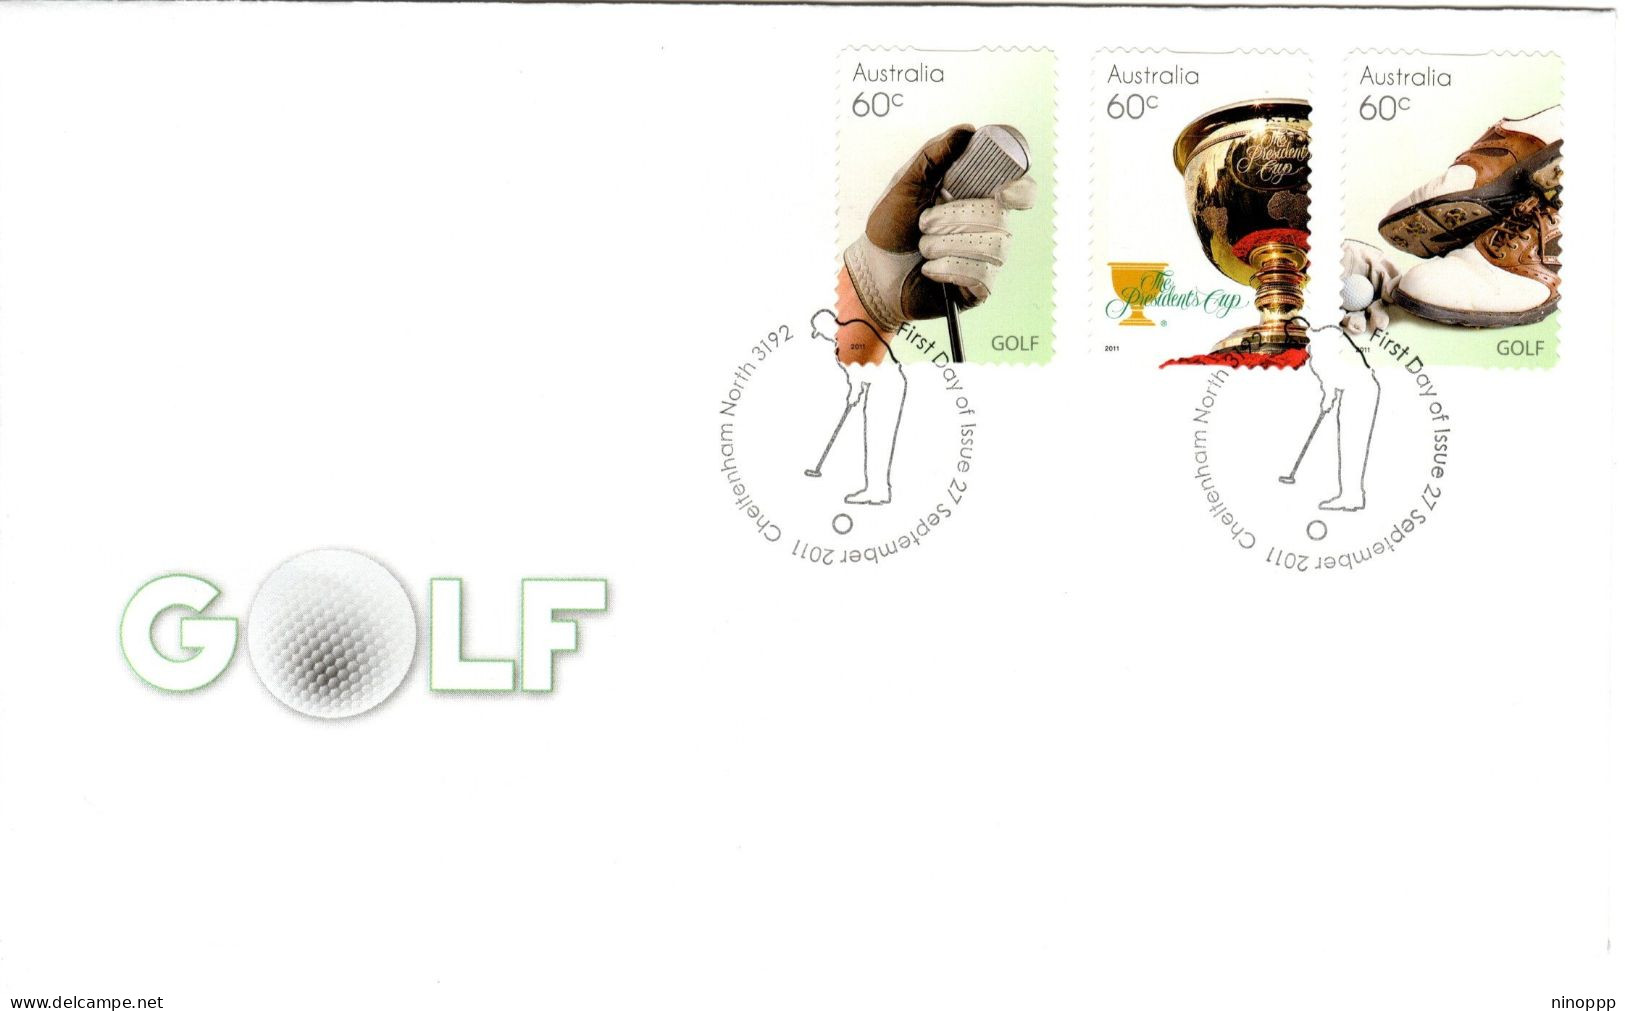 Australia 2011 Golf,Self-adhesive,FDI - Postmark Collection